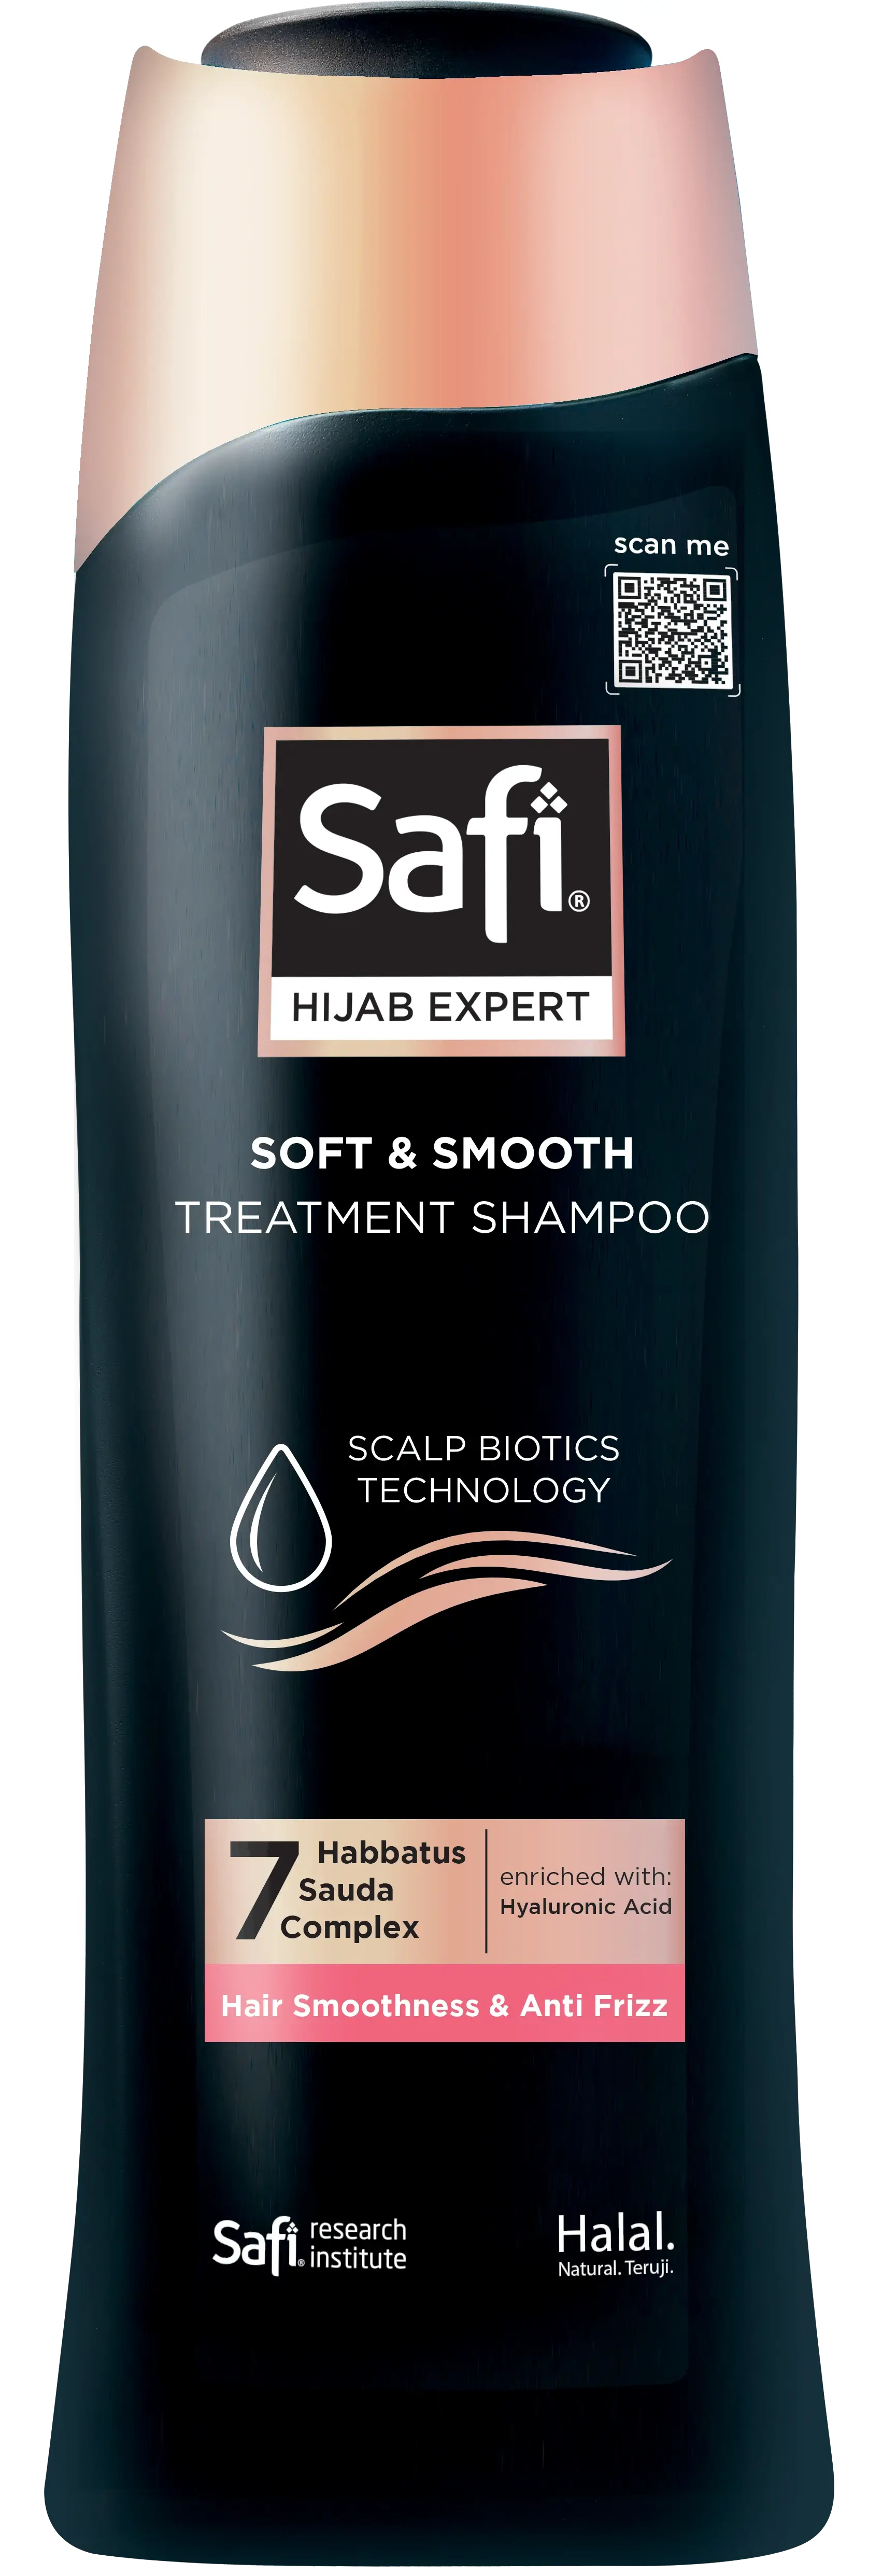 Safi Hijab Expert Soft & Smooth Shampoo hadir dengan Hijab Scalp Microbiome Technology dan 7 Habbatus Sauda Complex. - Safi Hijab Expert Soft & Smooth Shampoo